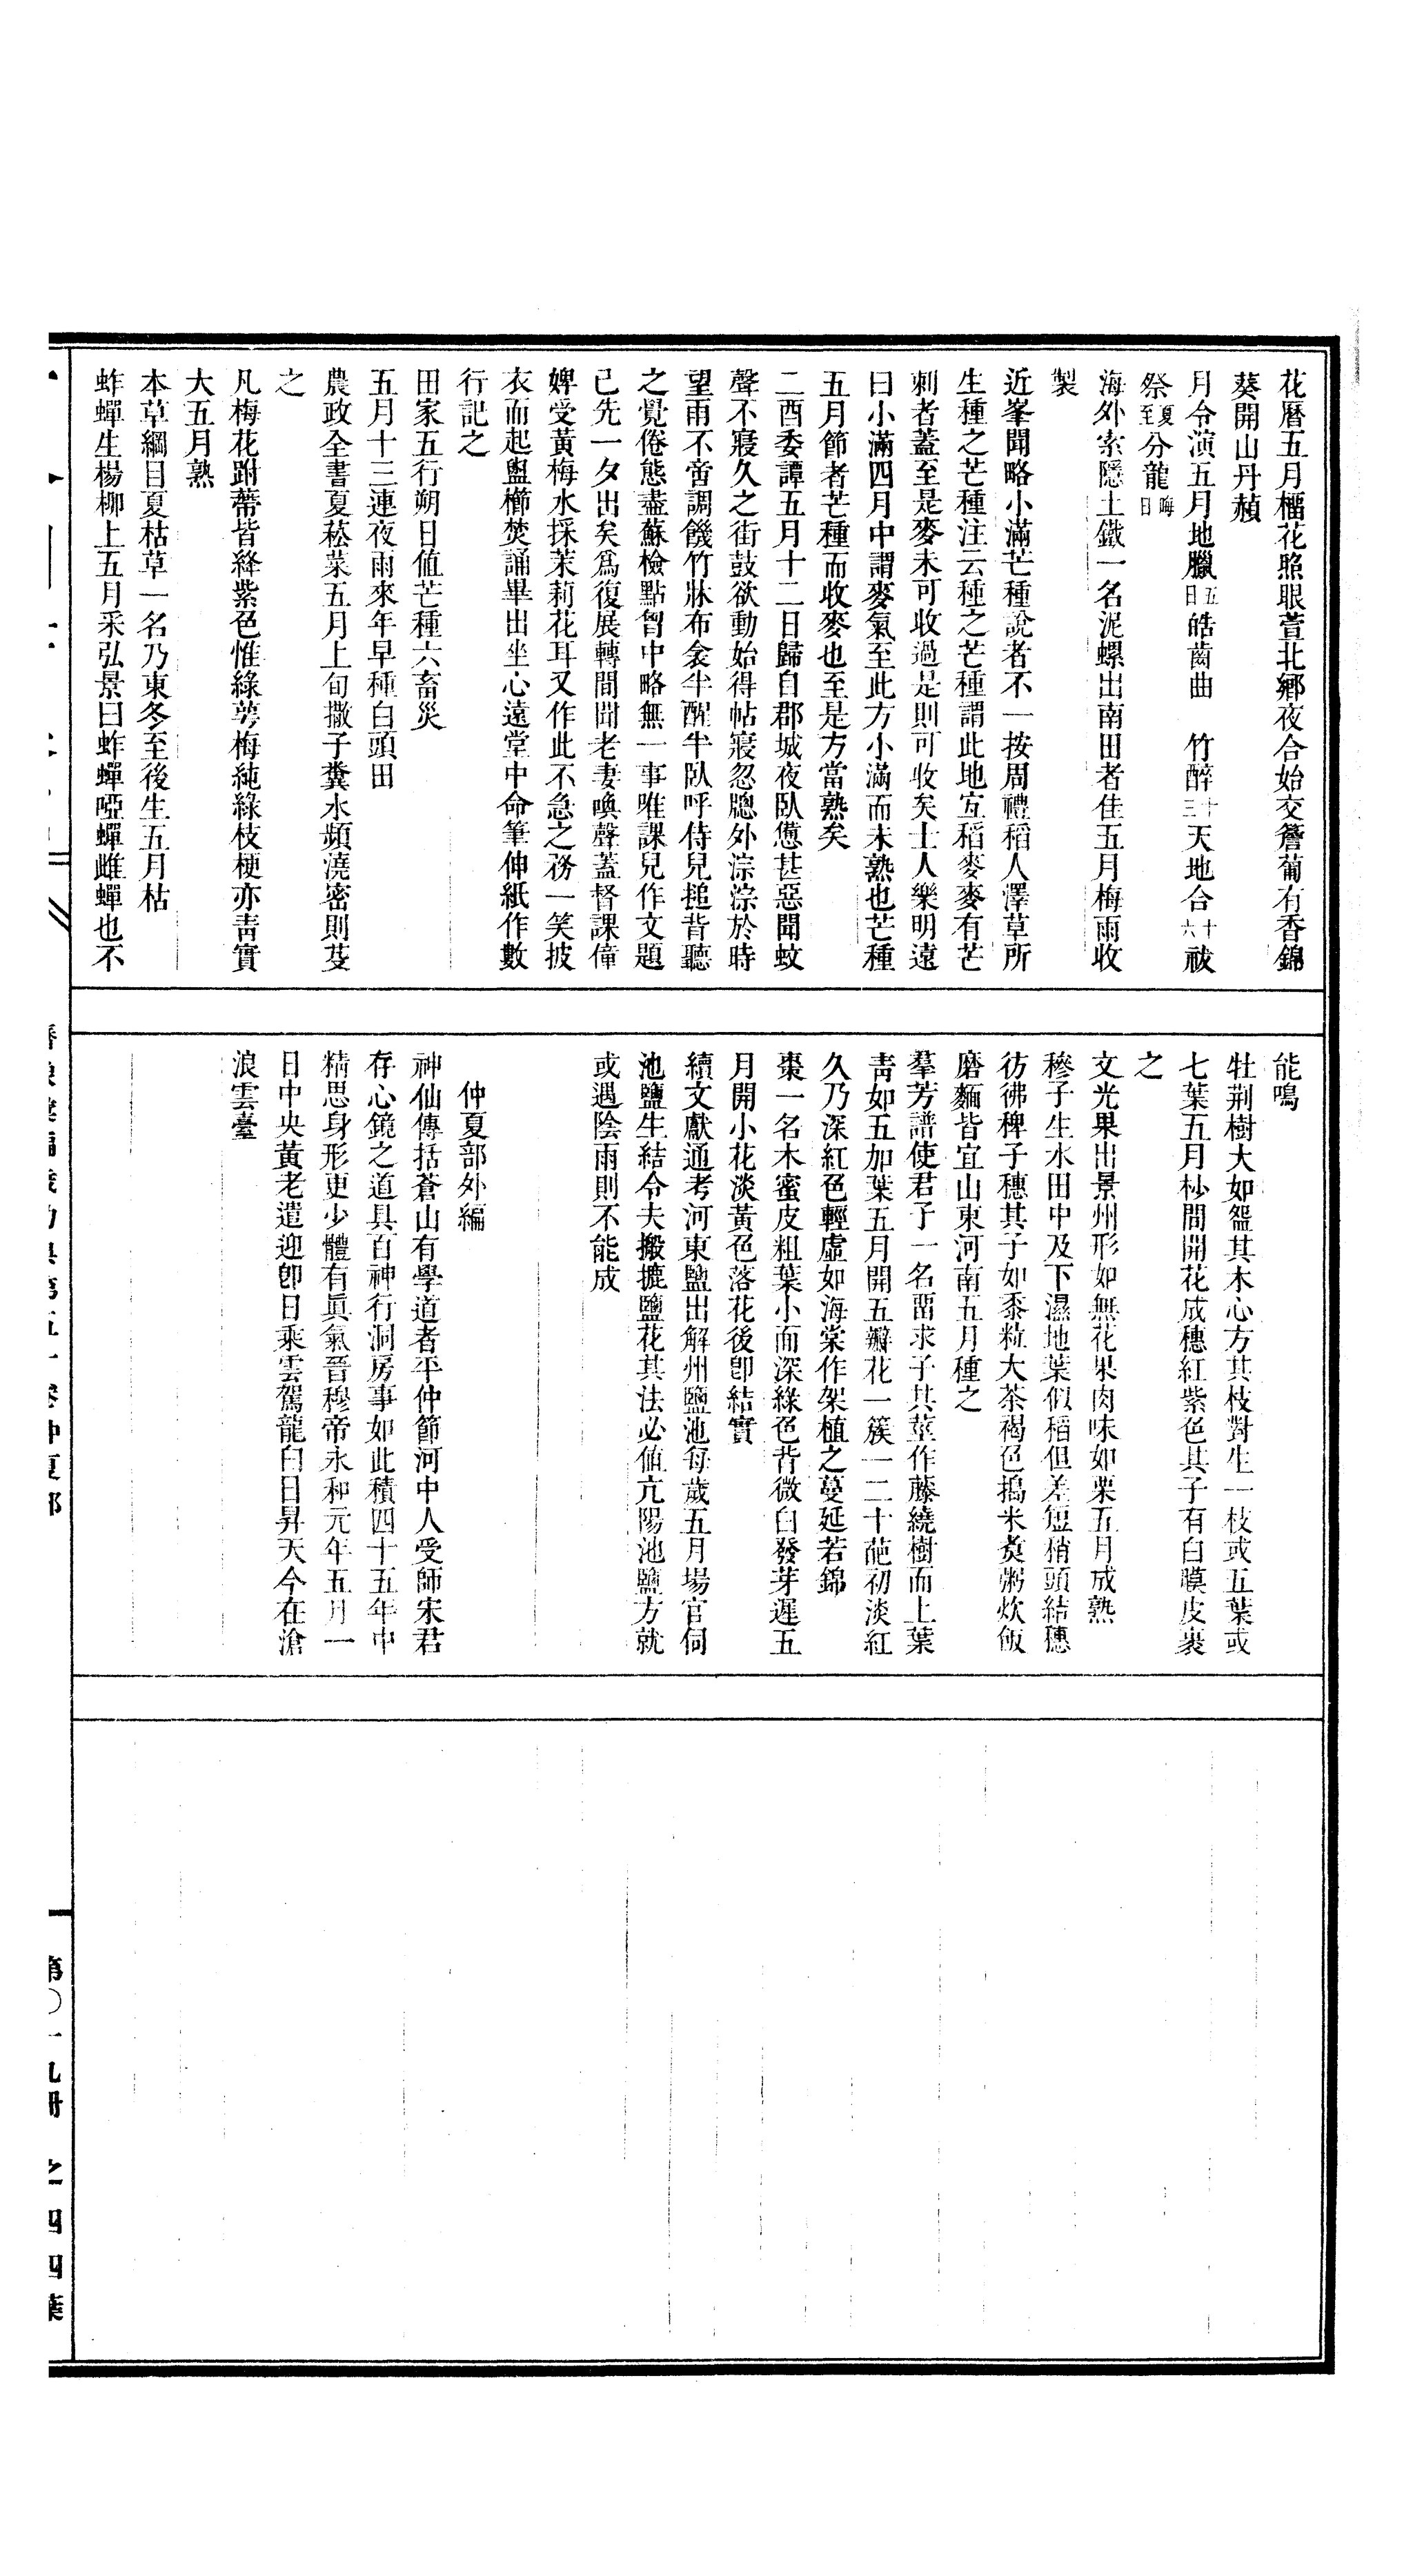 Page Gujin Tushu Jicheng Volume 019 1700 1725 Djvu 维基文库 自由的图书馆